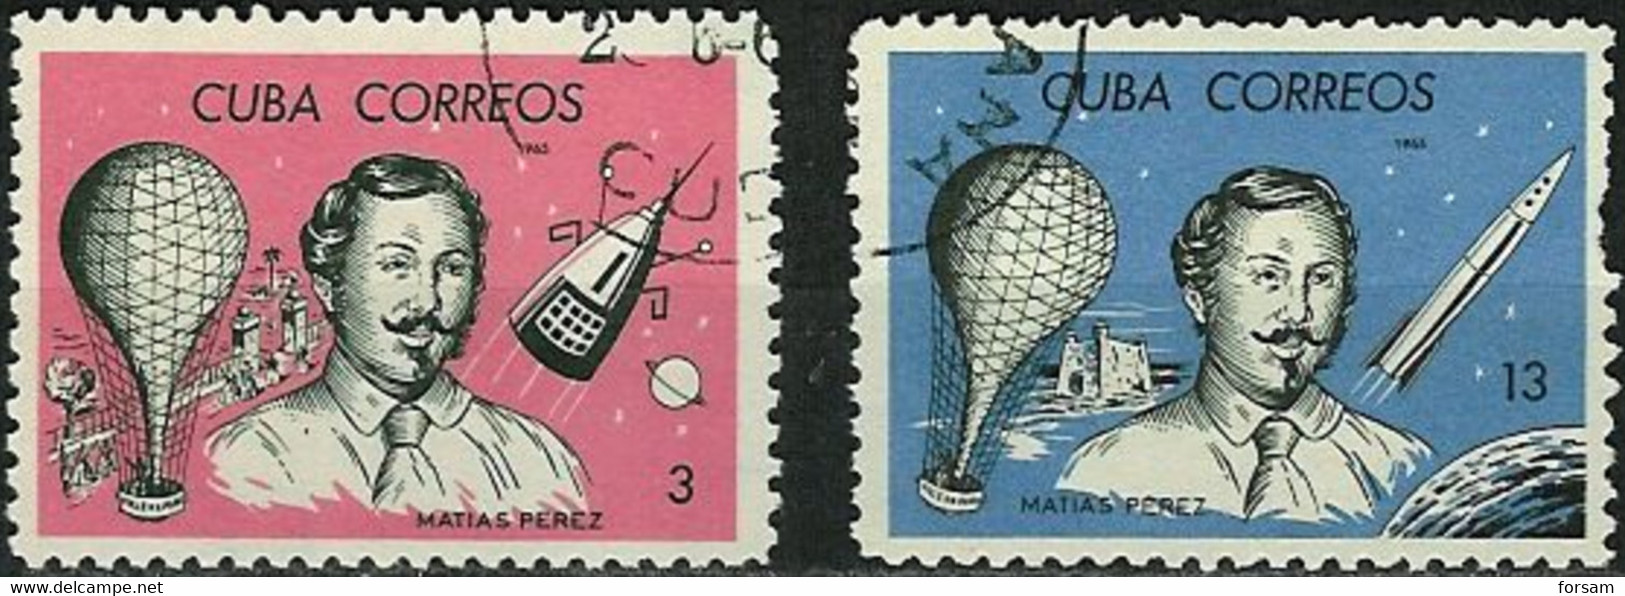 CUBA..1965...Michel # 1033-1034...used...MiCV - 2.20 Euro. - Oblitérés